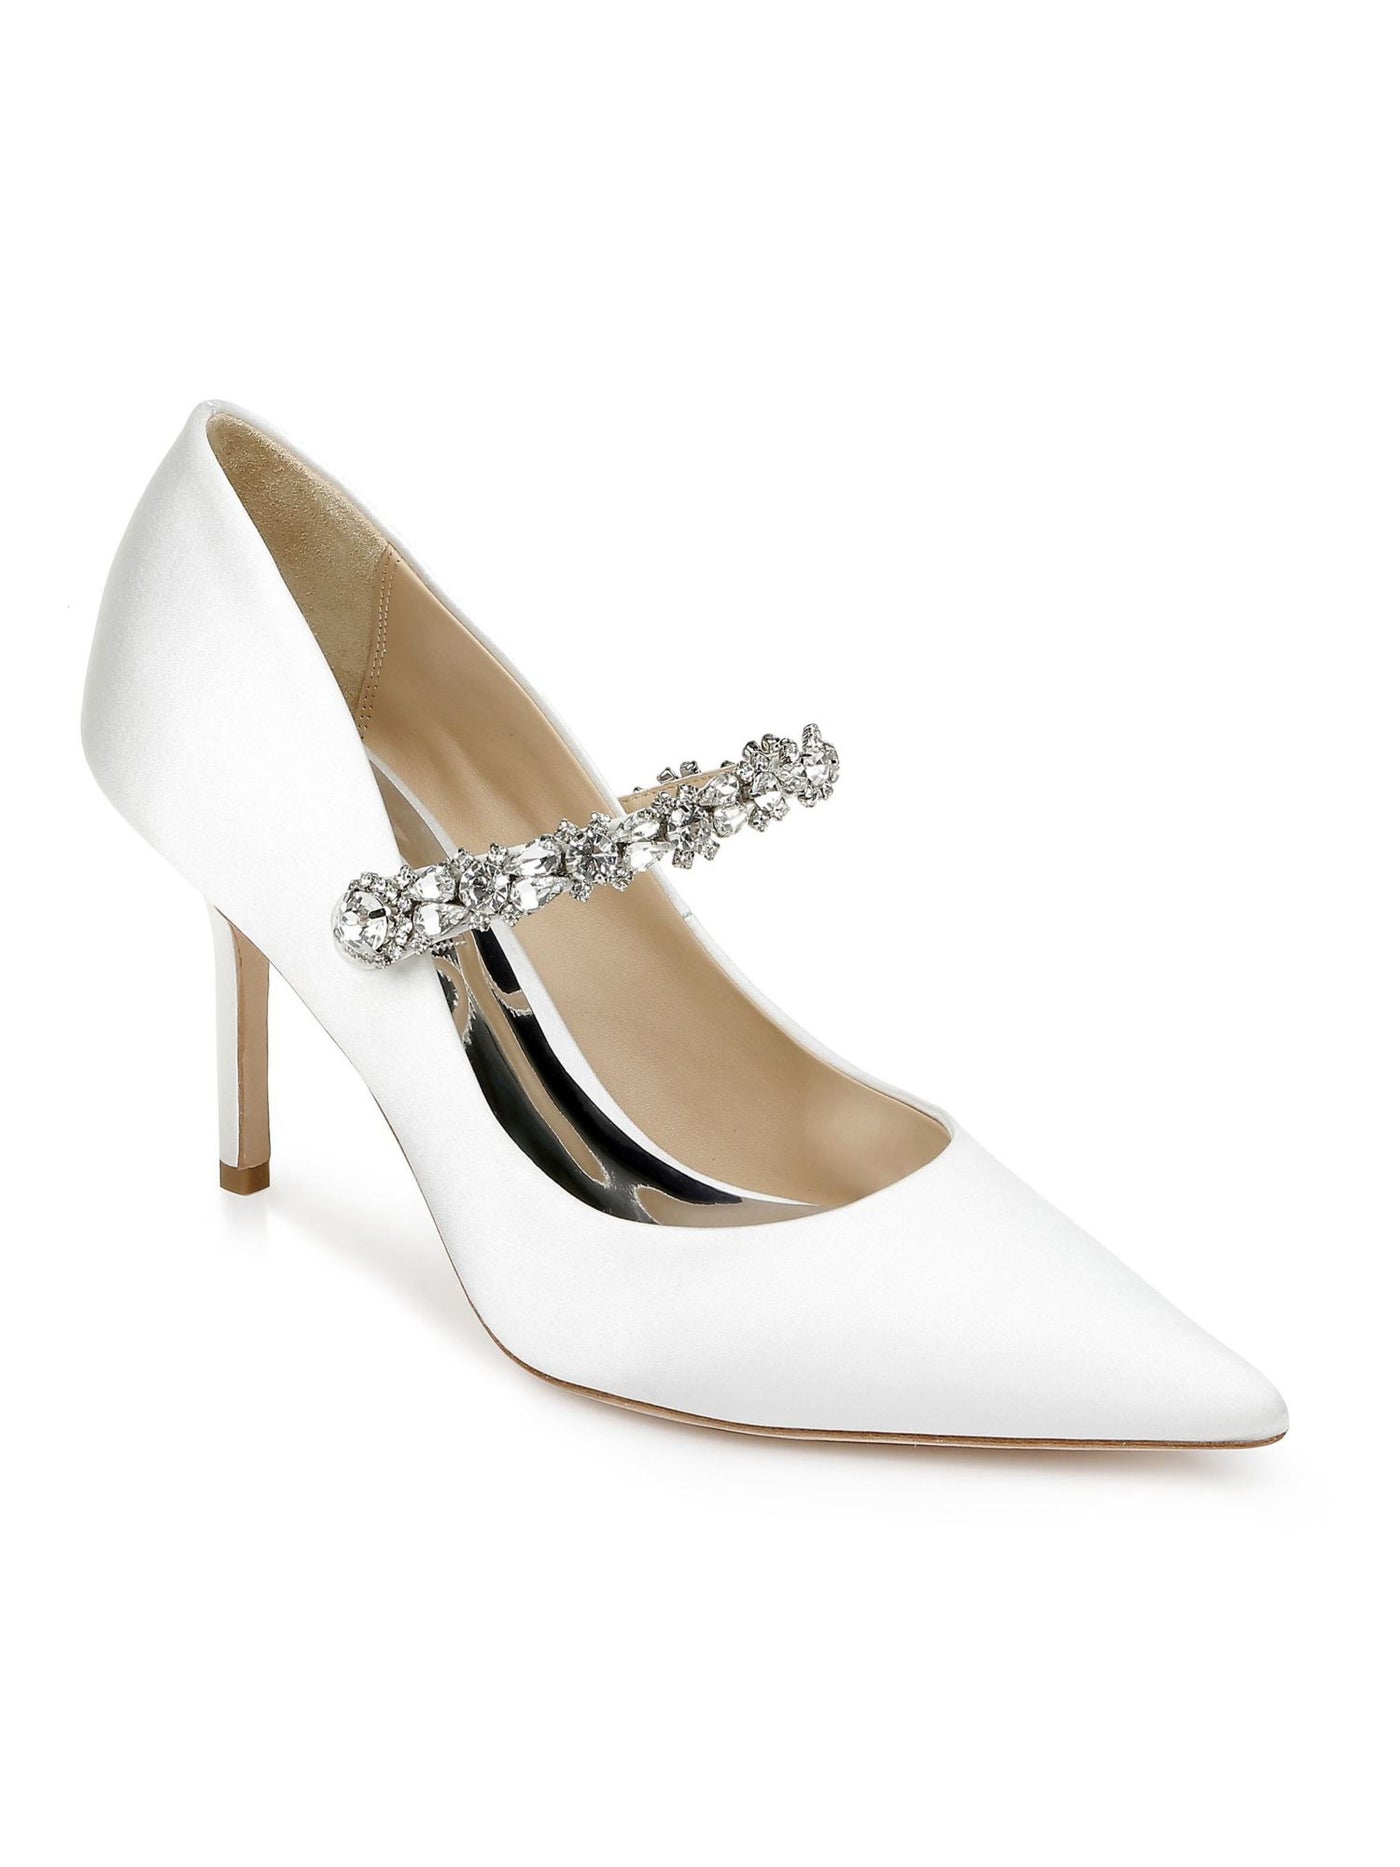 BADGLEY MISCHKA Womens White Padded Embellished Theory Peep Toe Stiletto Slip On Dress Pumps Shoes 9.5